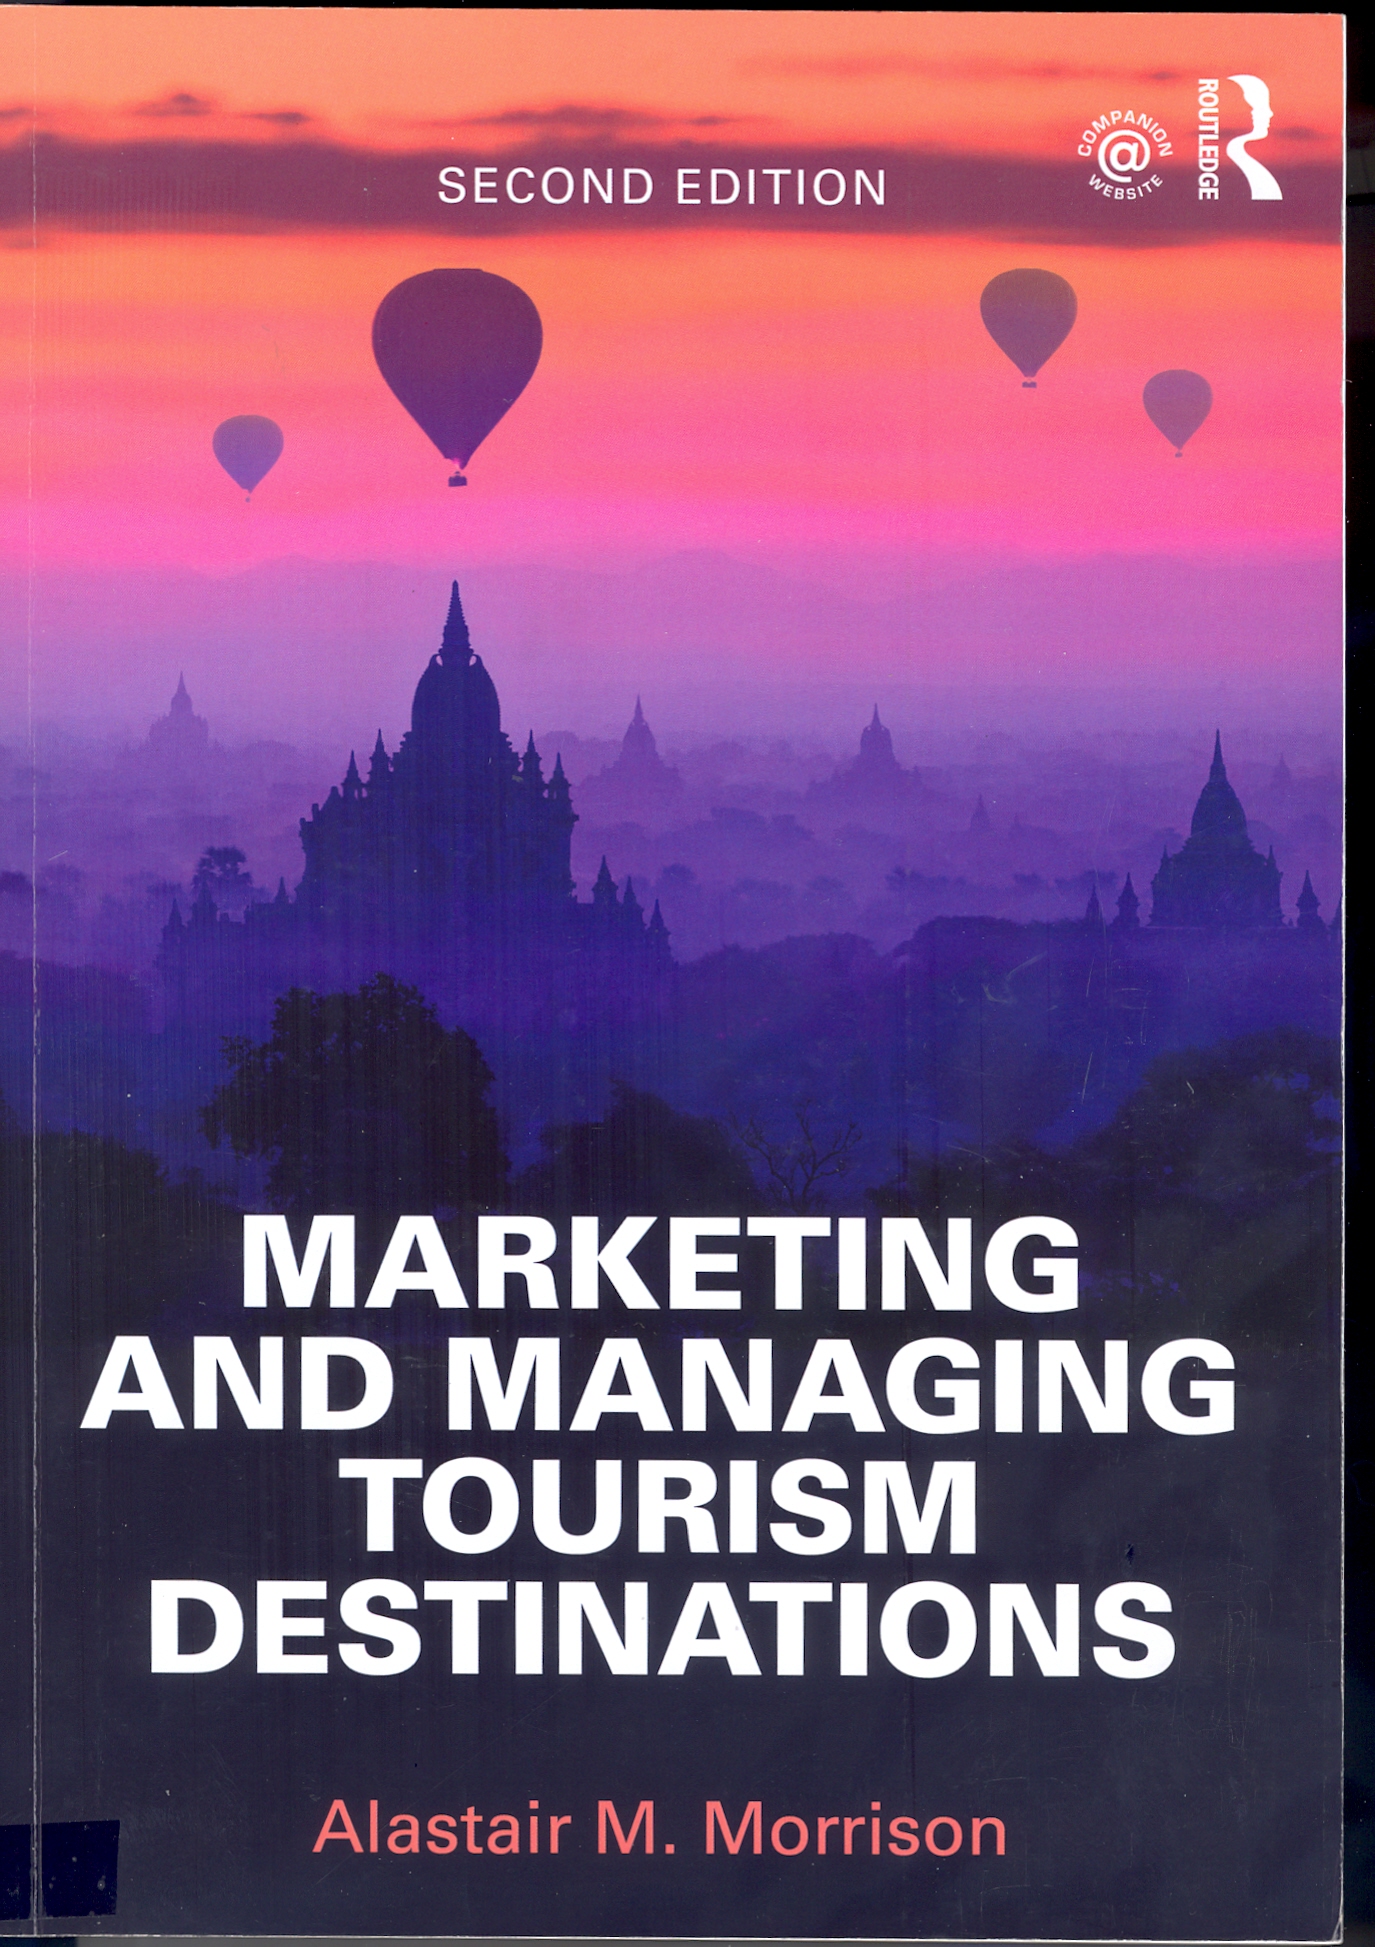 Tourism marketing. Tourism destination Management. Marketing and Managing Tourism destinations 2nd Edition. Tourism Management book. Management of Tourist destination..